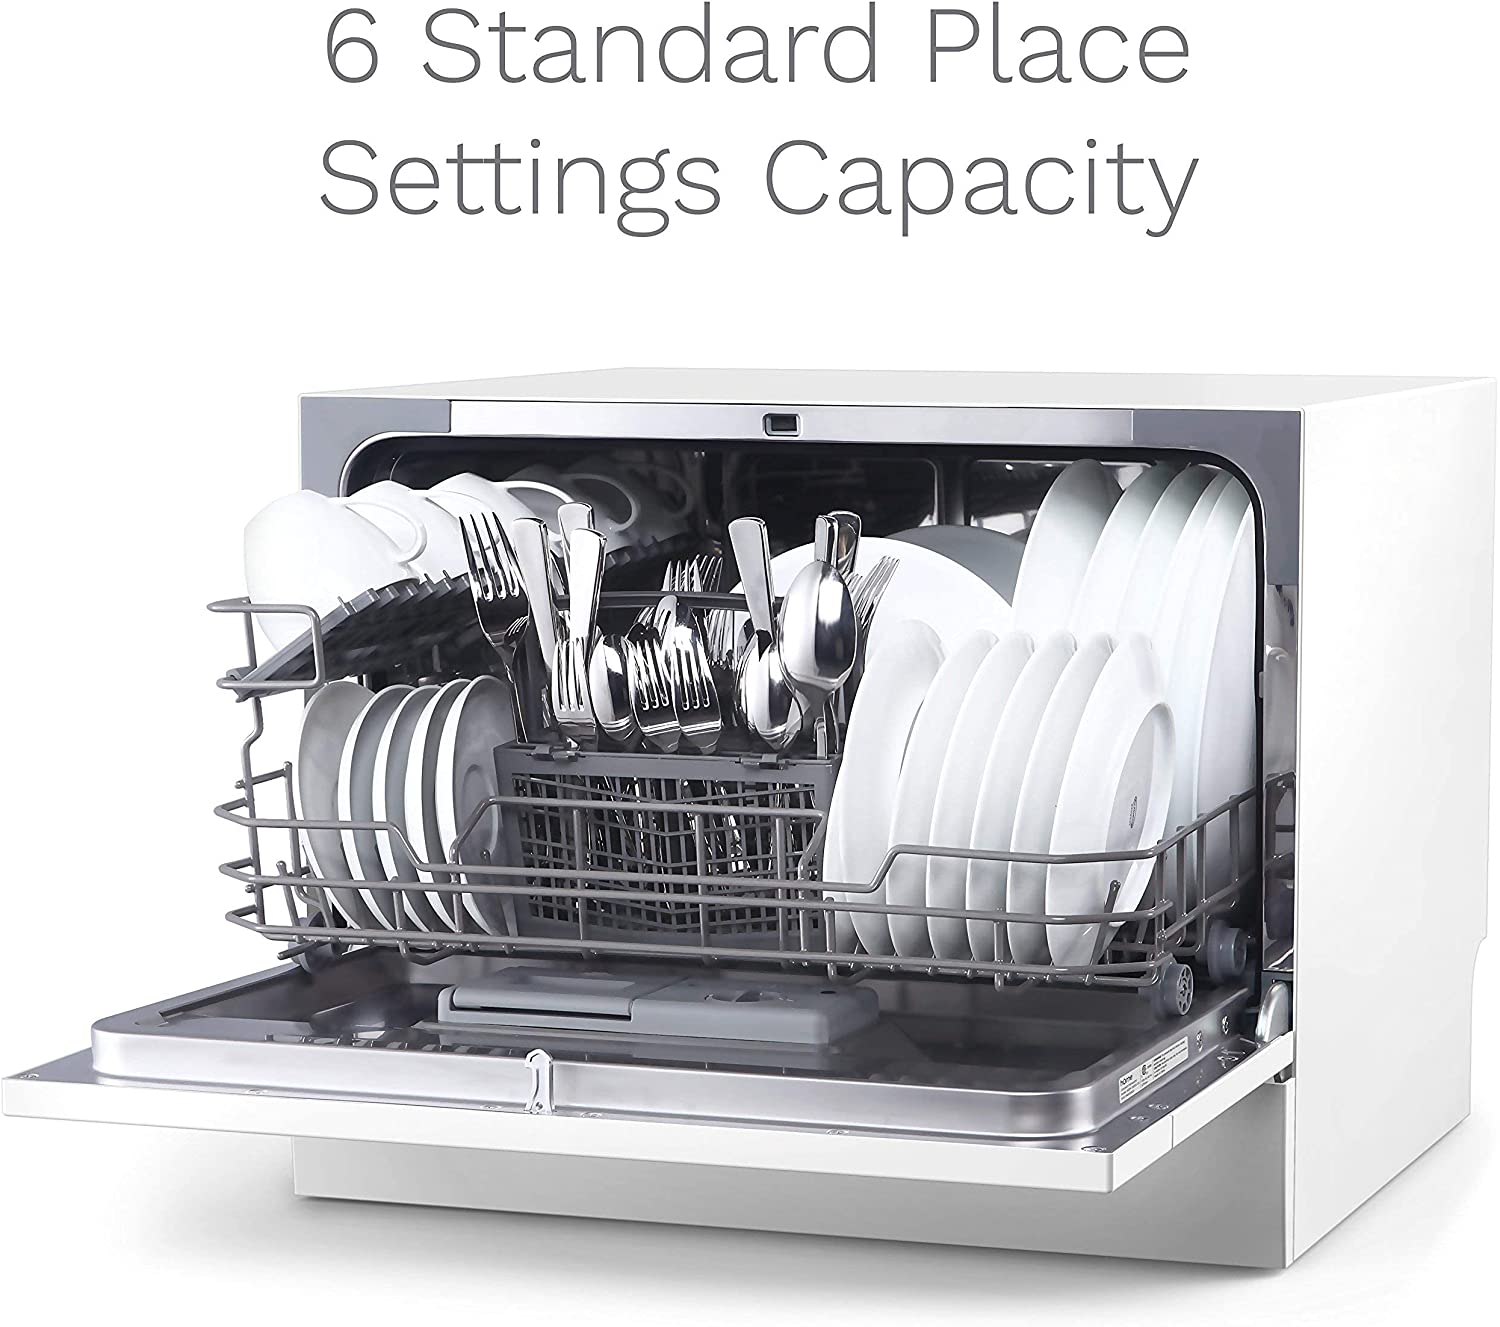 hOmeLabs Digital Countertop Dishwasher - White